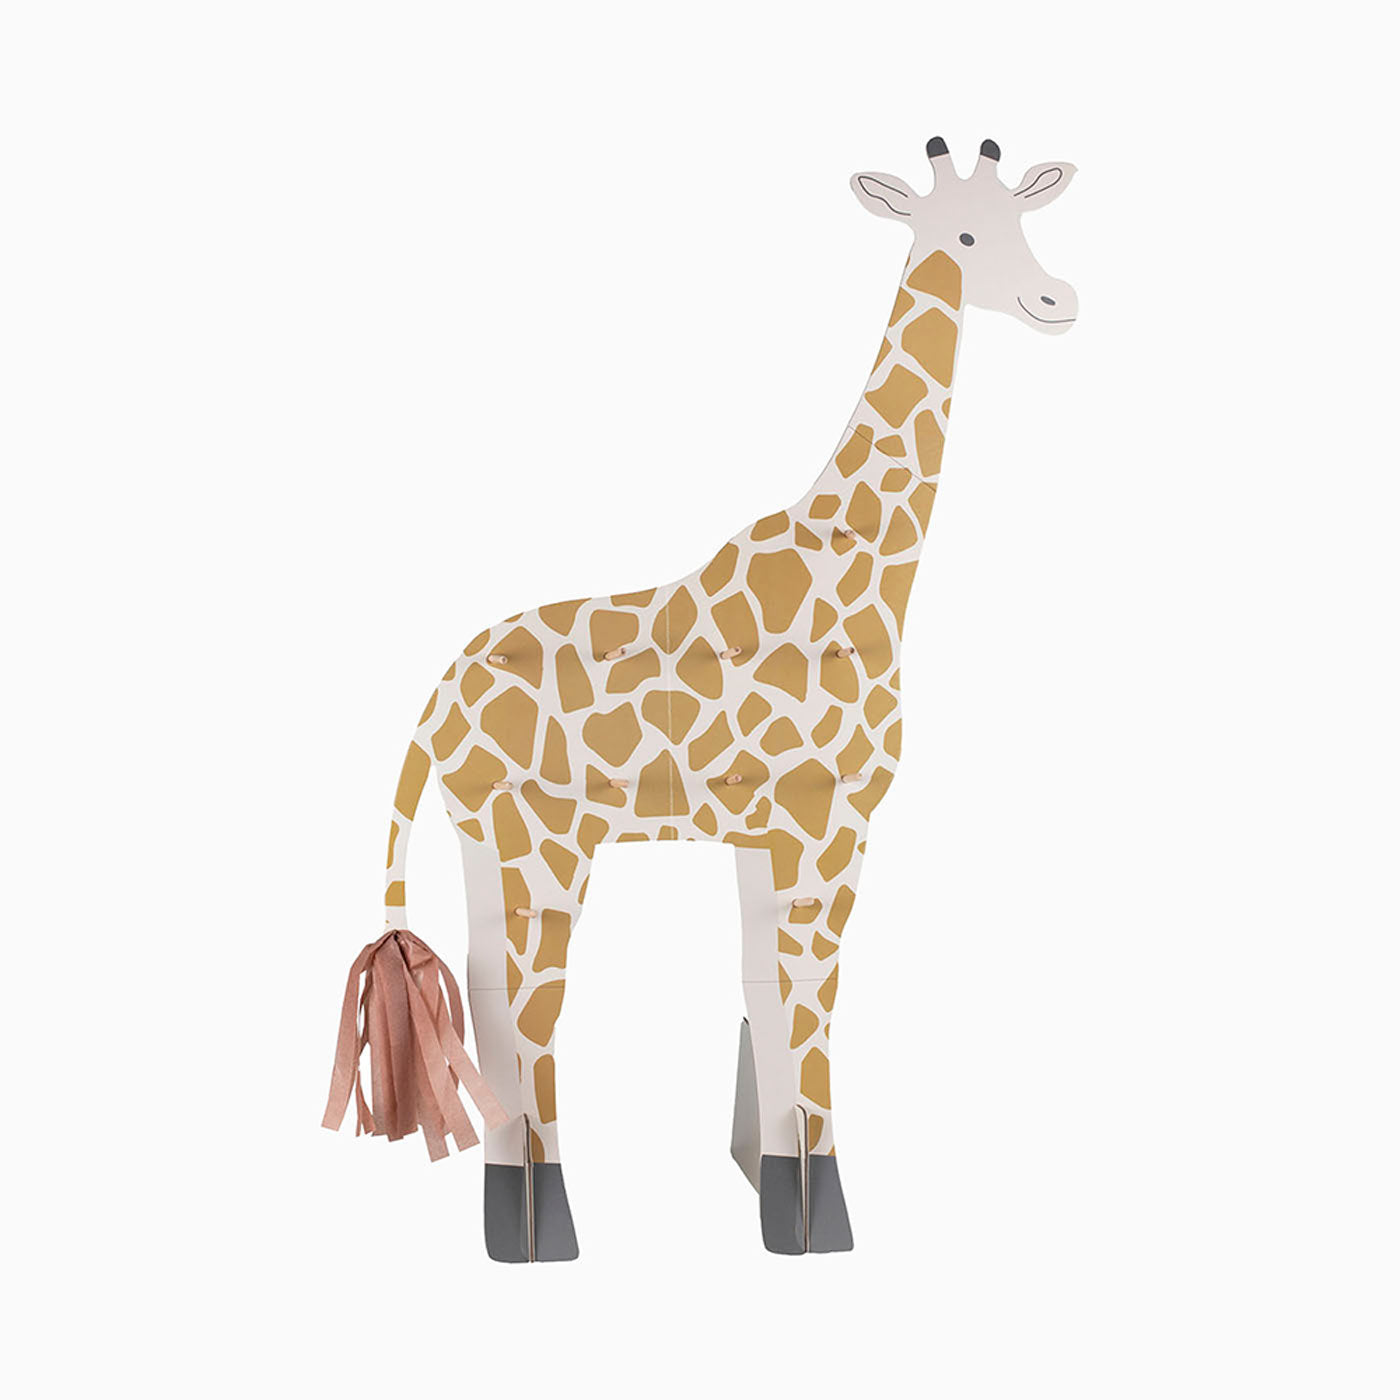 Display giraffa per ciambelle